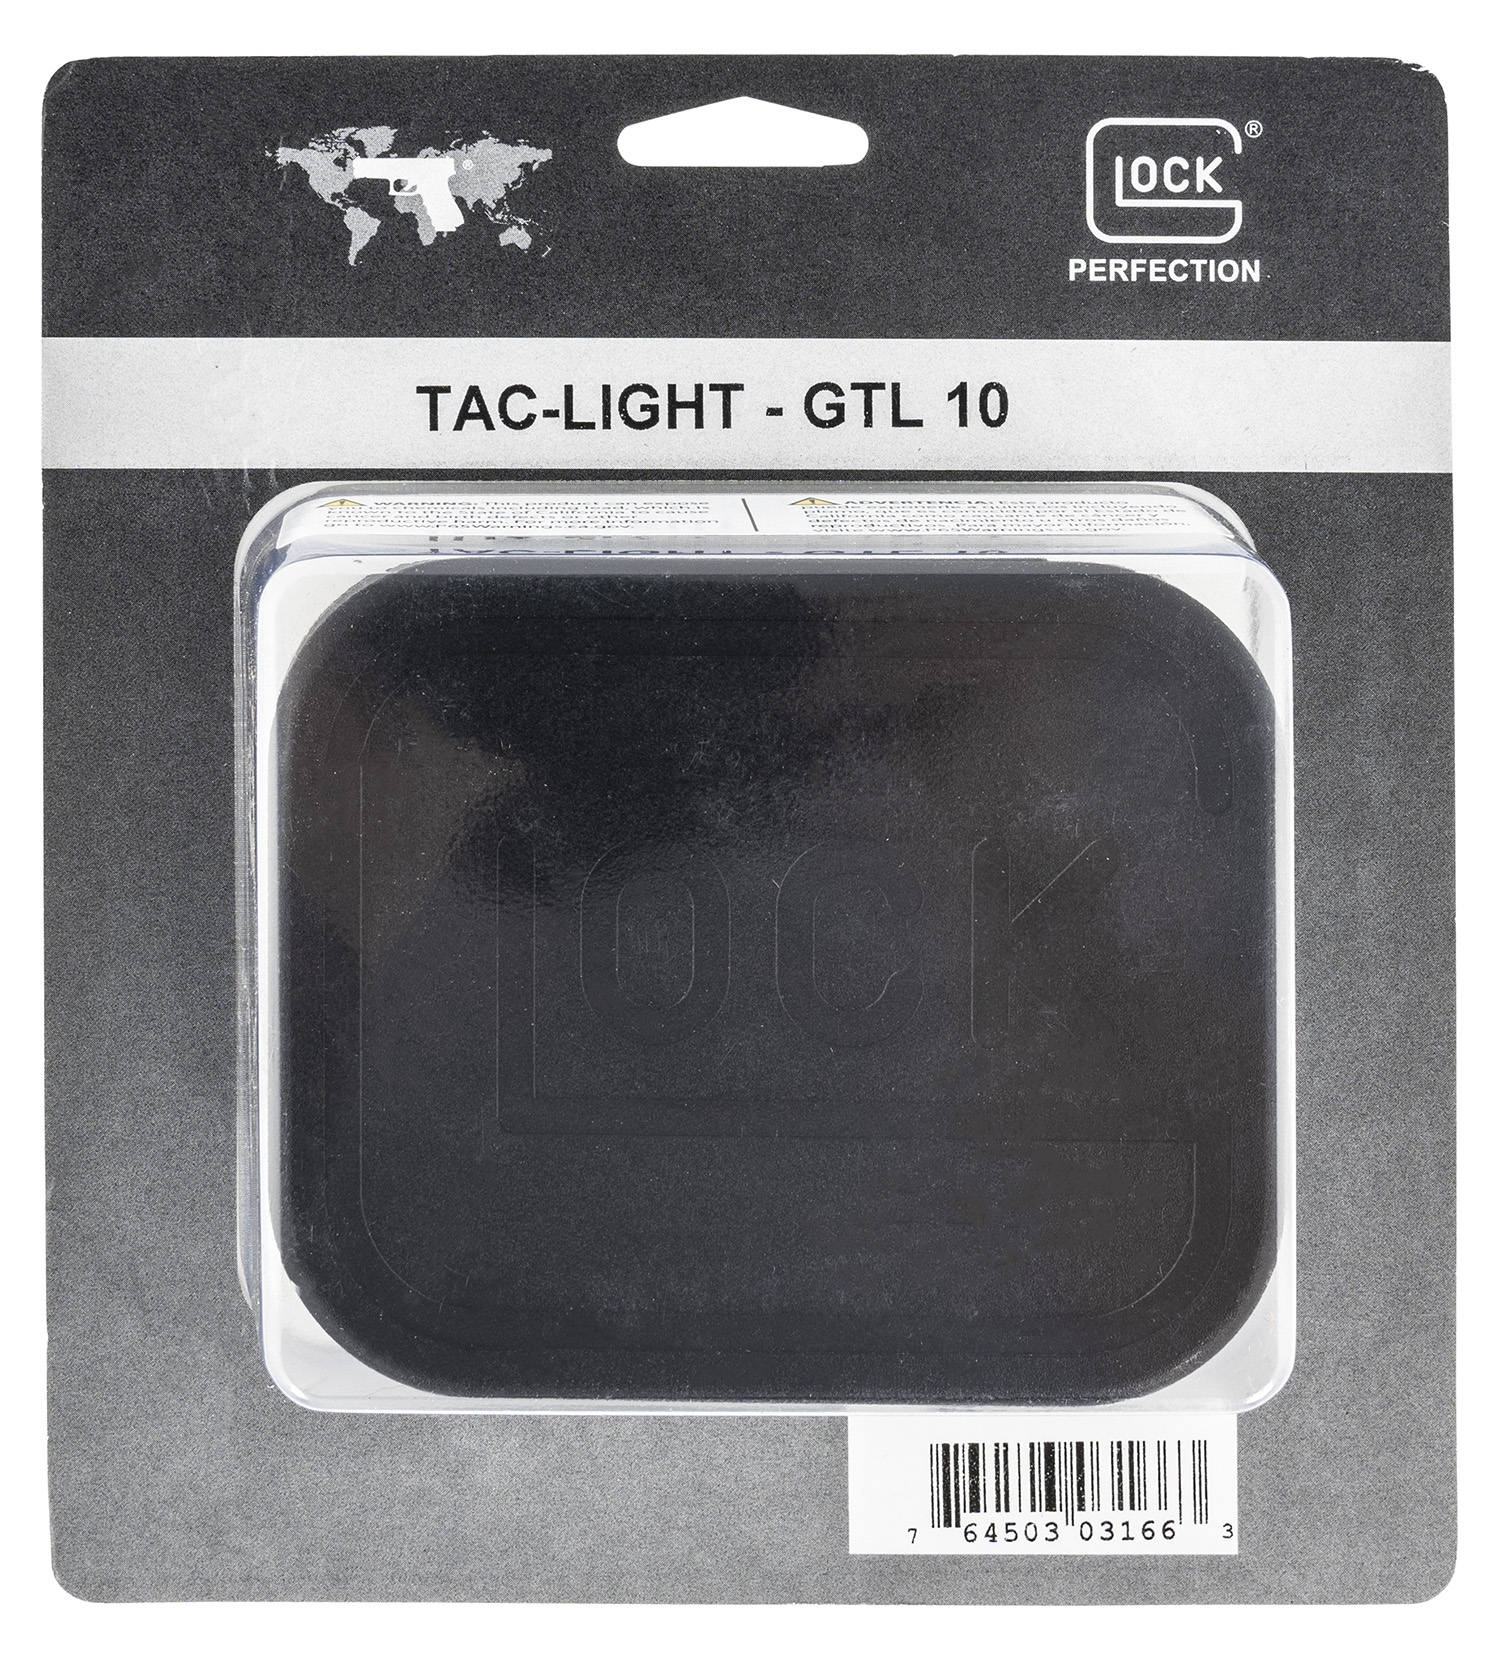 Glock TAC03166 GTL 10 Tactical Light For Handgun 70 Lumens Output White Xenon Light Black Polymer